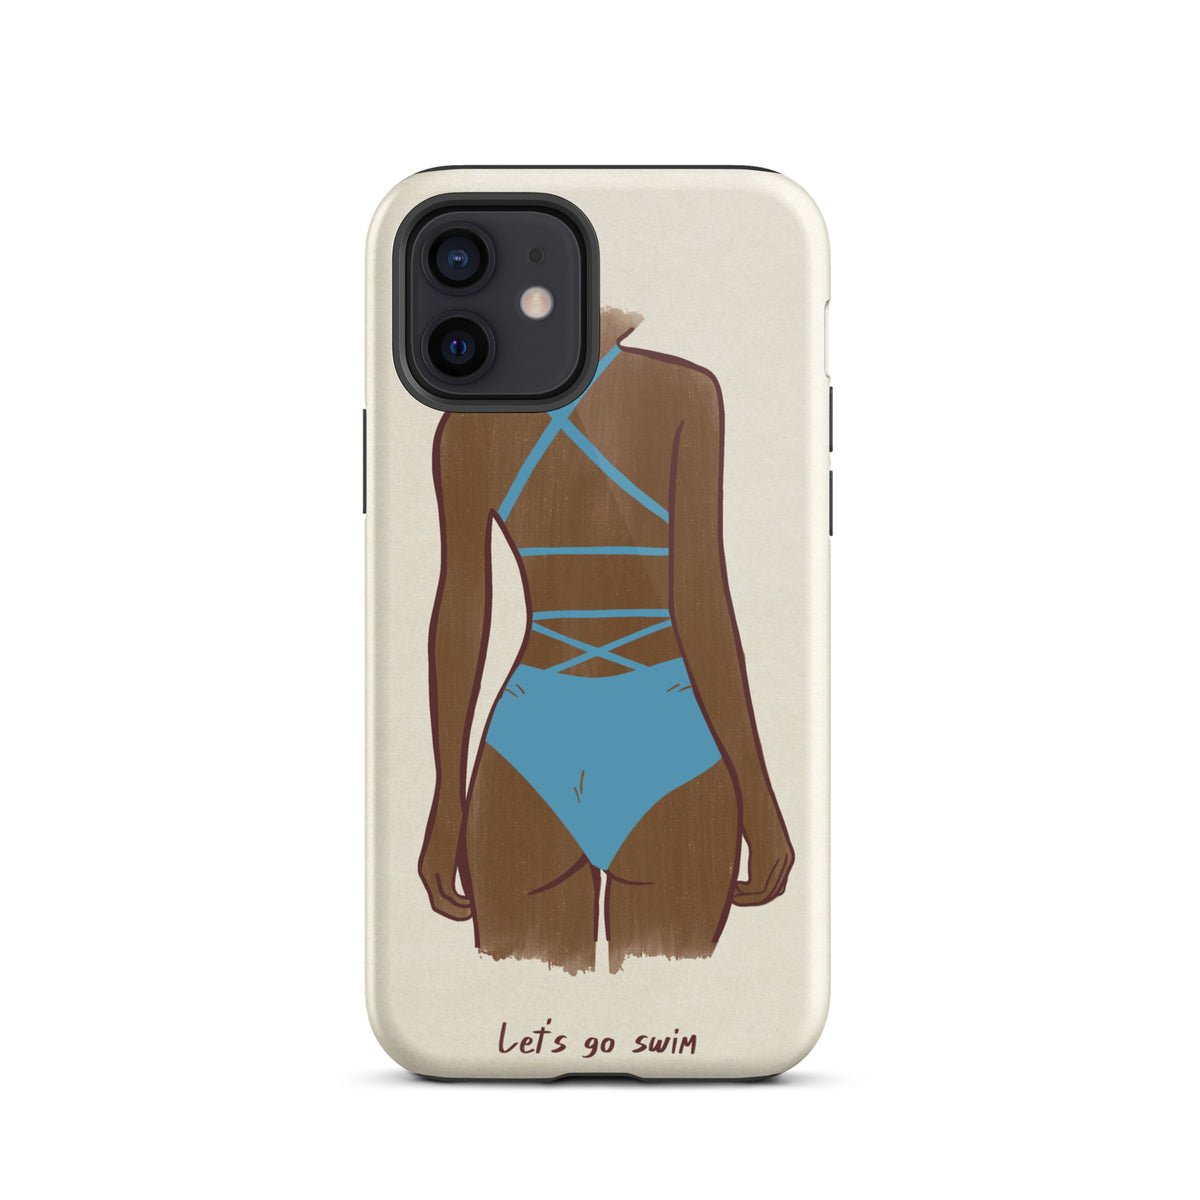 Lets go swim iphone case